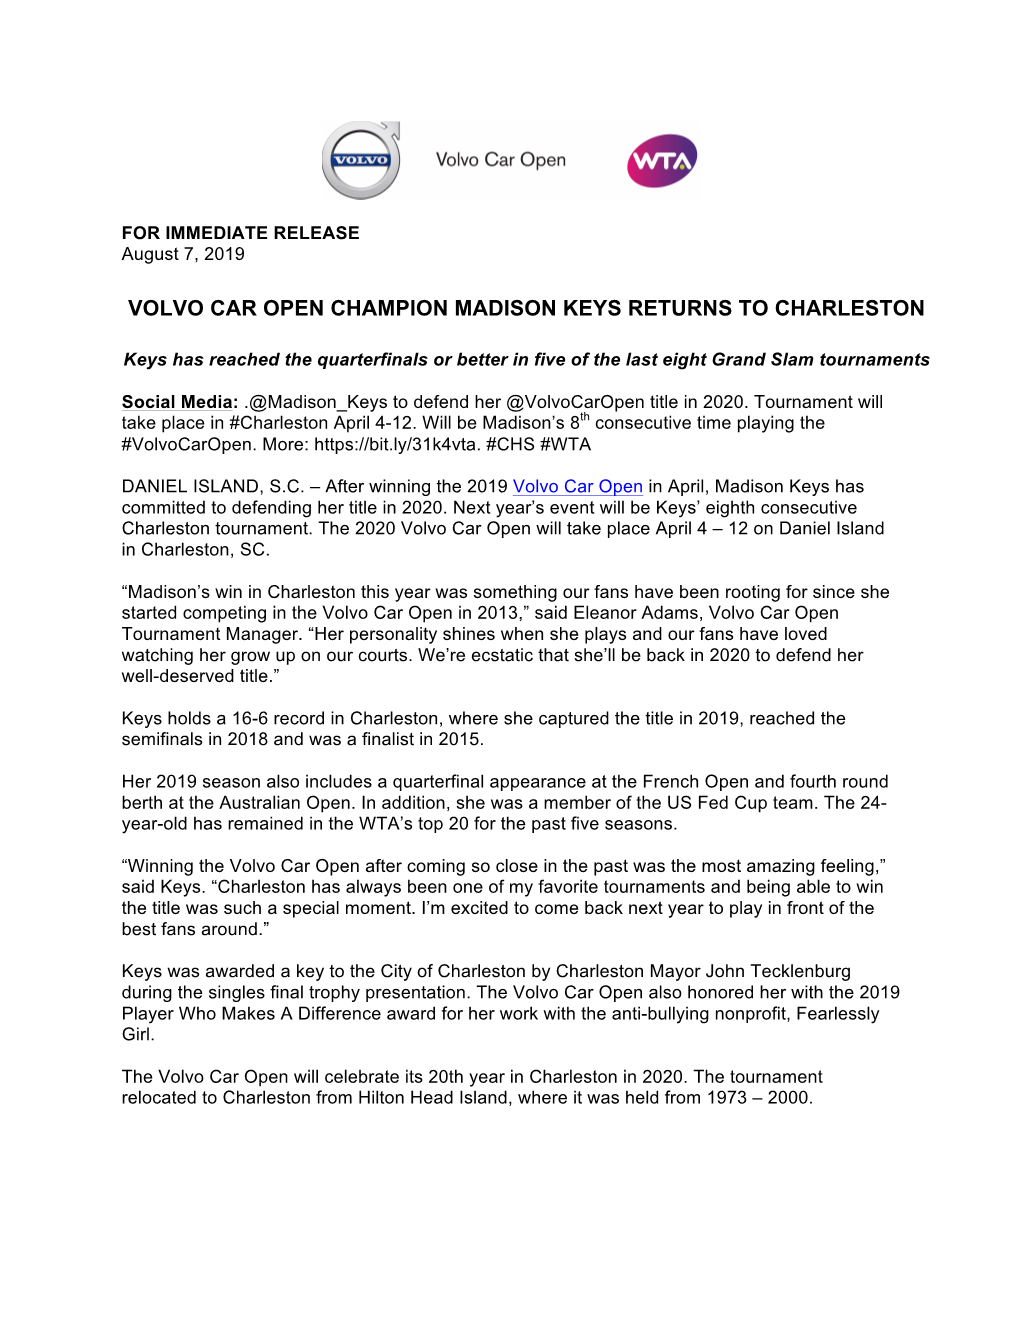 Volvo Car Open Champion Madison Keys Returns to Charleston